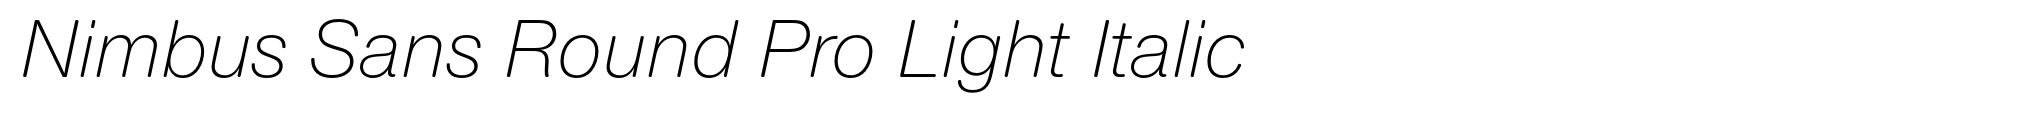 Nimbus Sans Round Pro Light Italic image